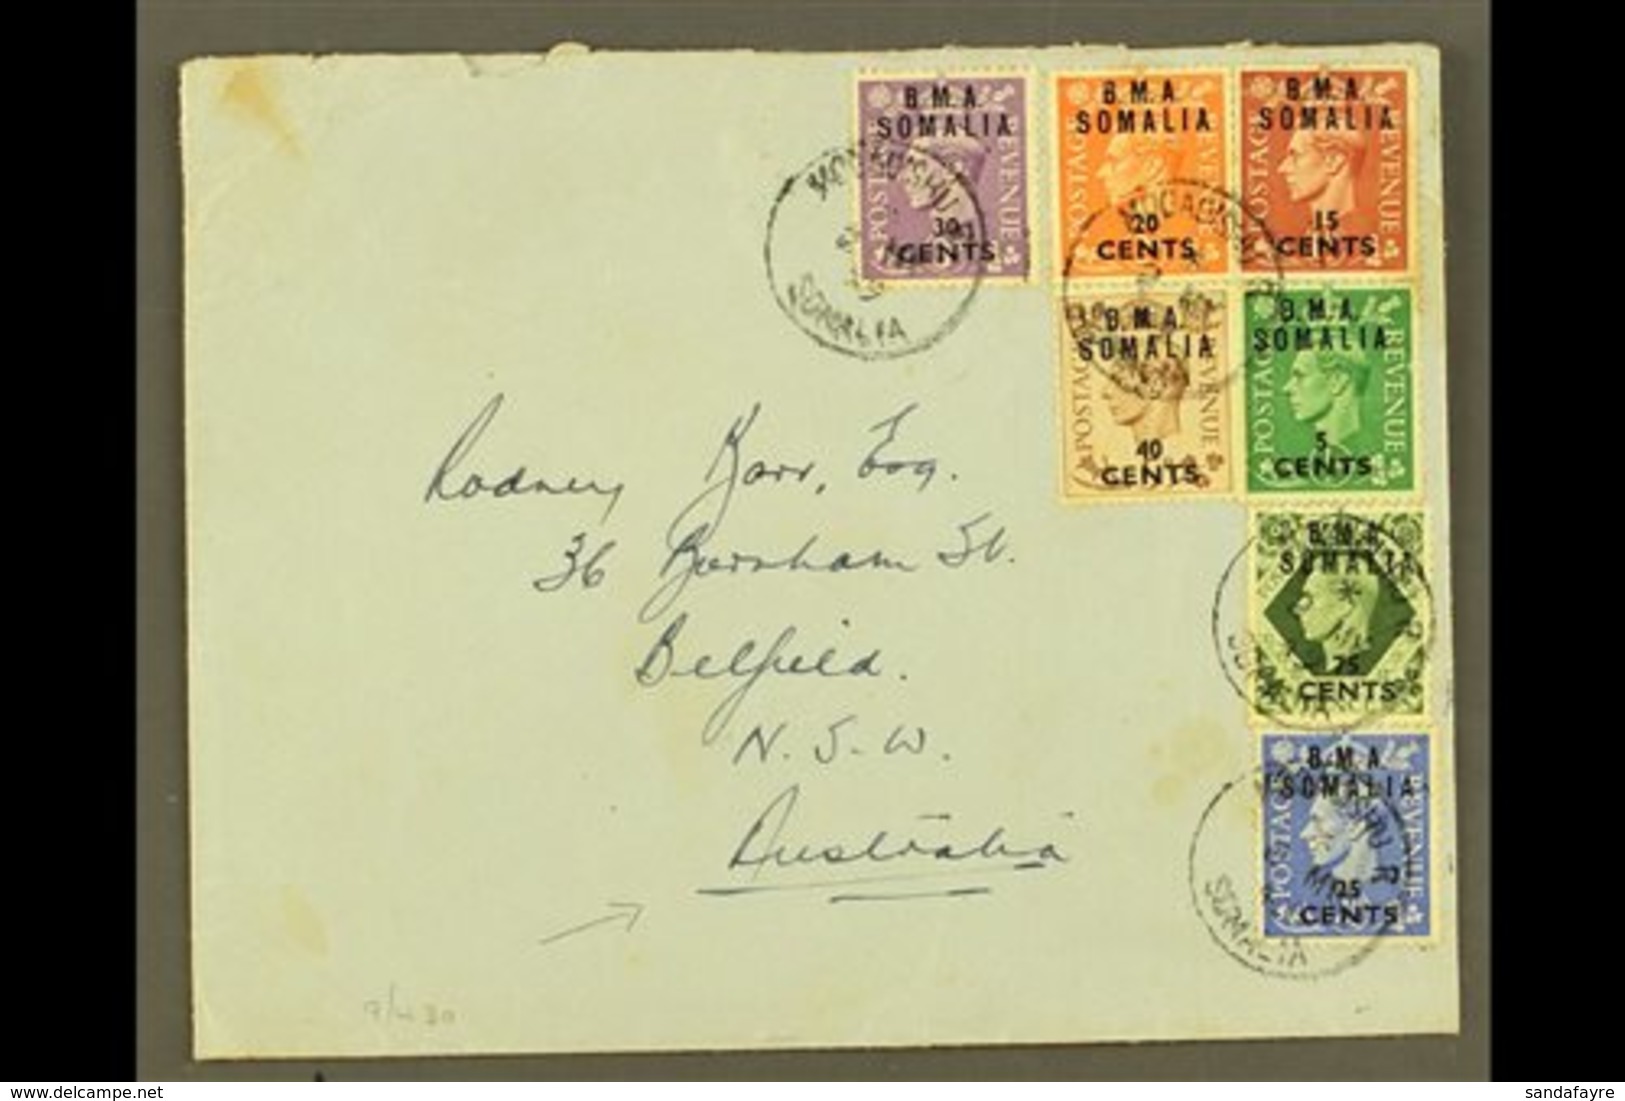 SOMALIA  1949 Plain Envelope To Australia, Franked KGVI 5c On ½d To 40c On 5d & 75c On 9d "B.M.A. SOMALIA" Ovpts, SG S10 - Africa Orientale Italiana